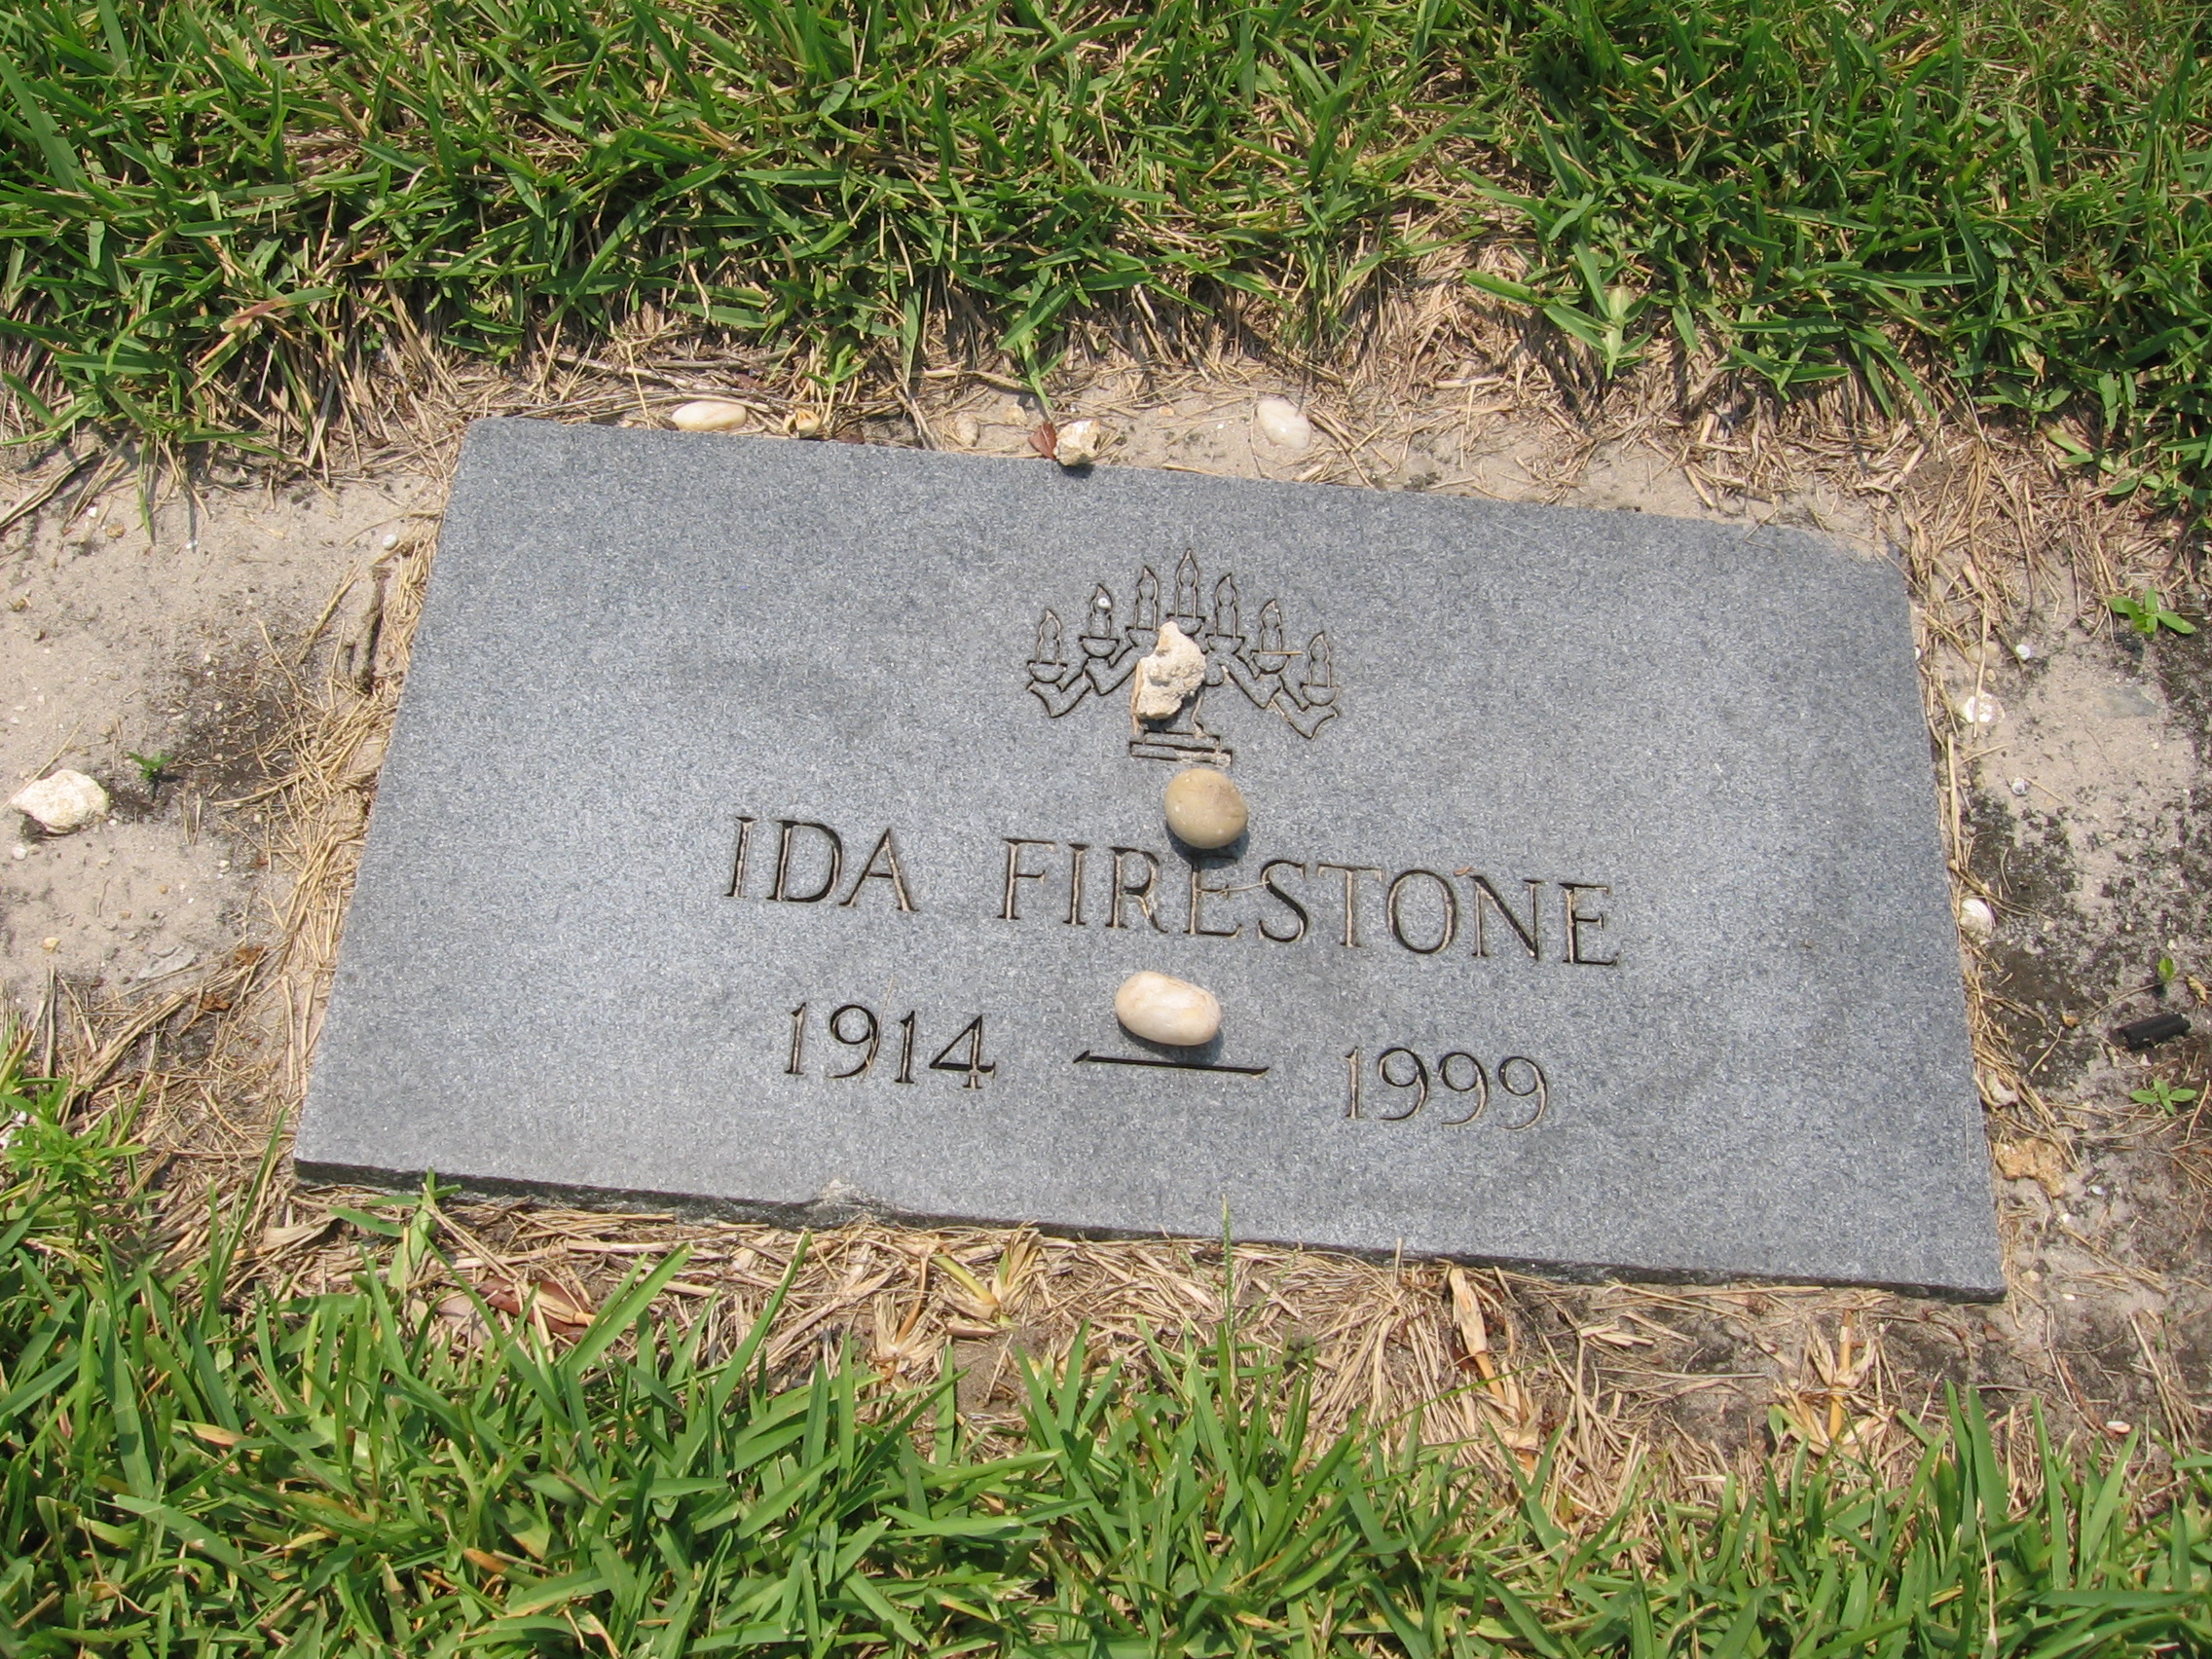 Ida Firestone